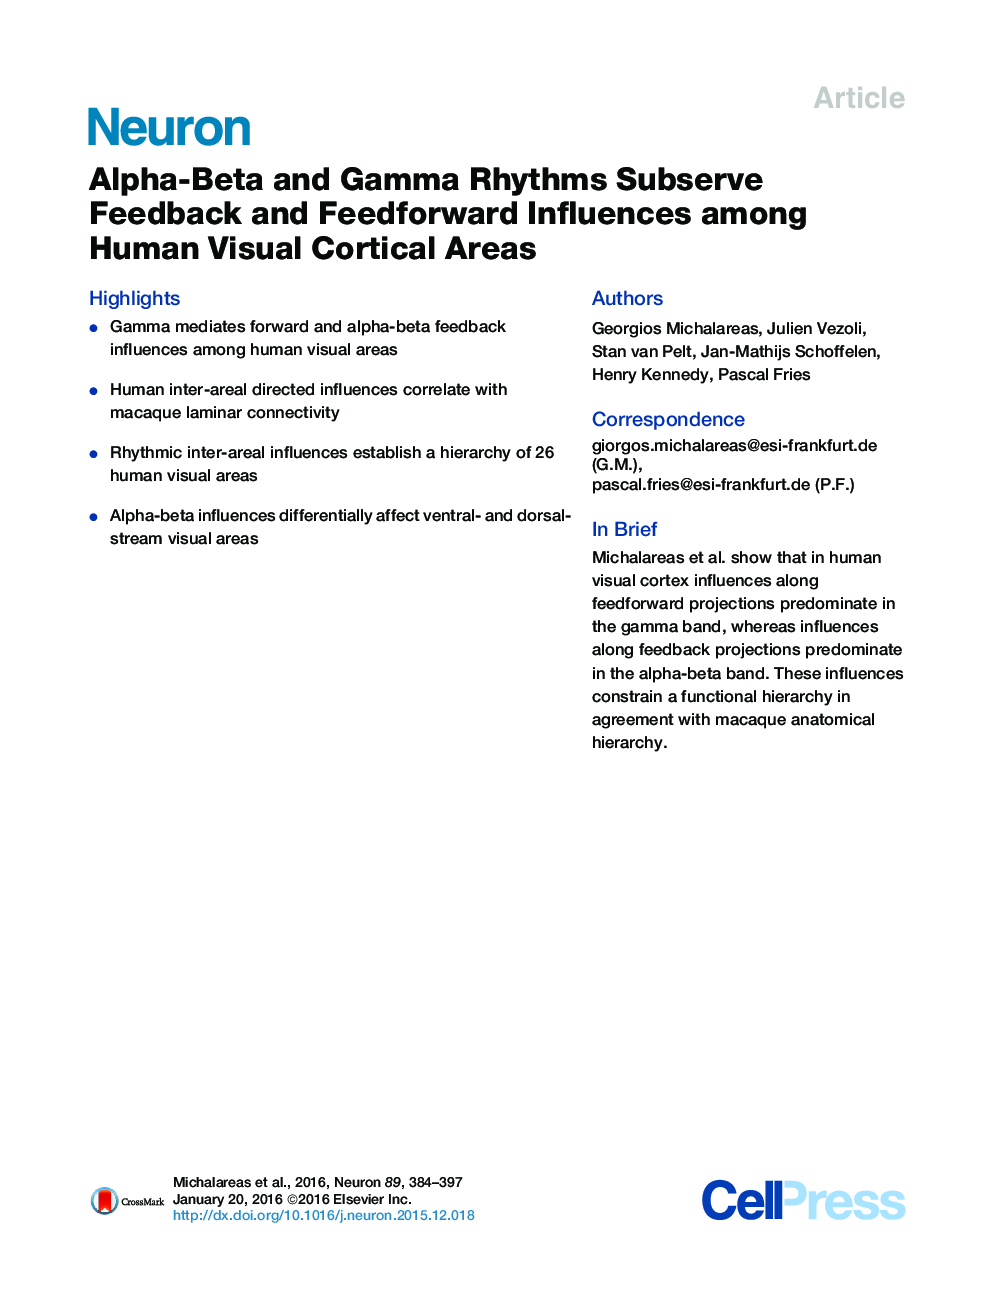 Alpha-Beta and Gamma Rhythms Subserve Feedback and Feedforward Influences among Human Visual Cortical Areas